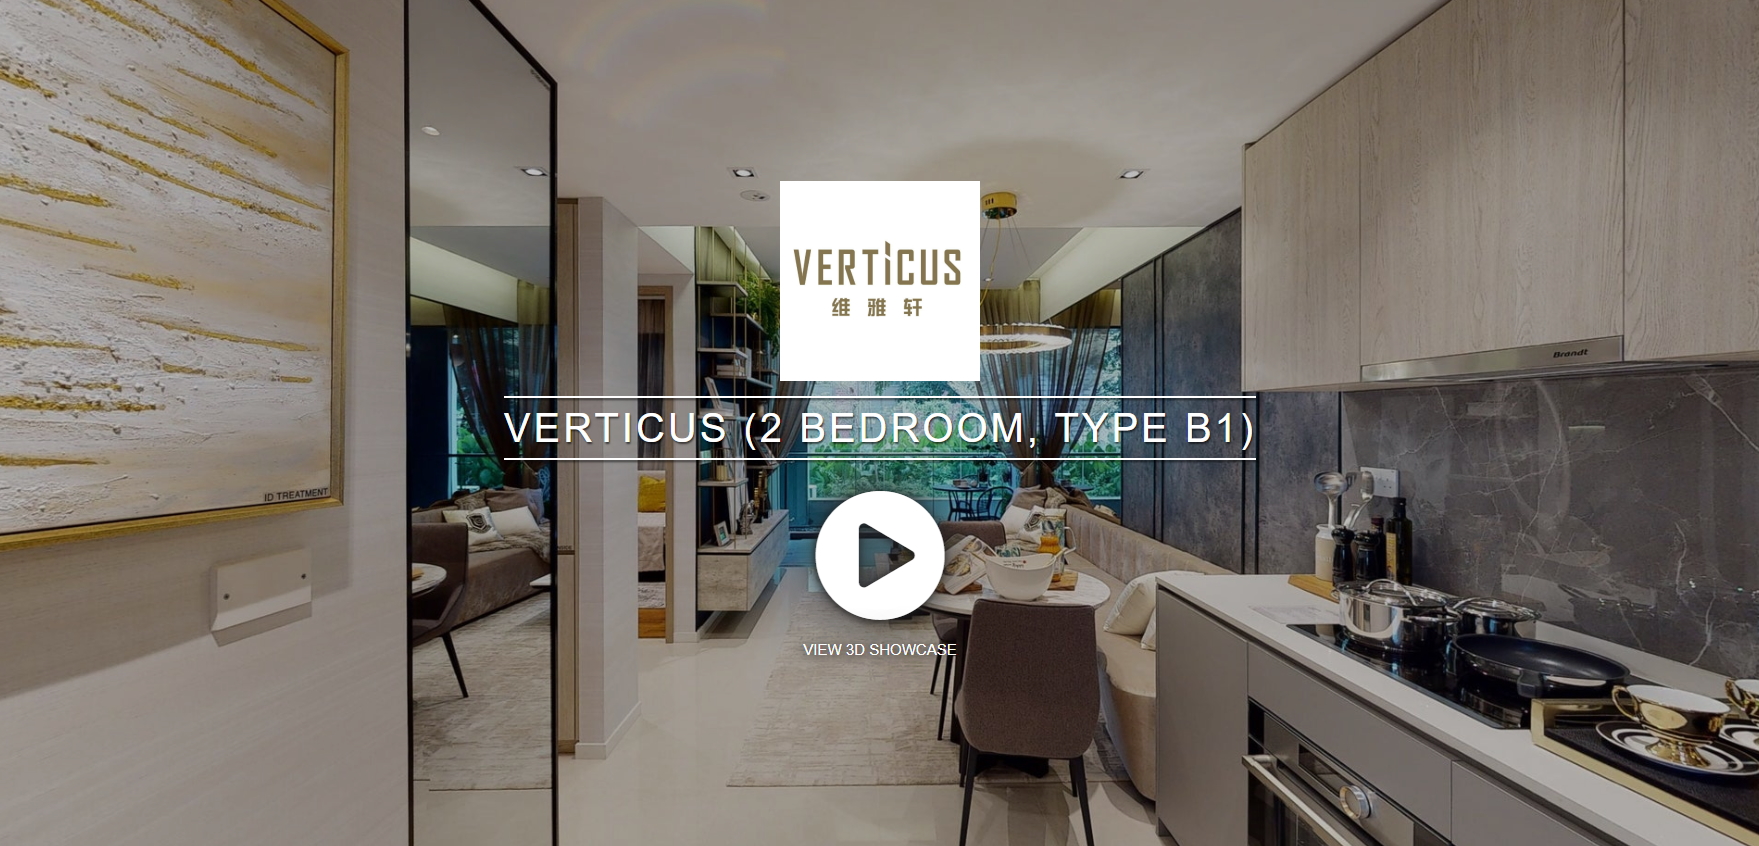 3D Virtual Tour of Verticus 2 Bedroom Showflat, Type B1